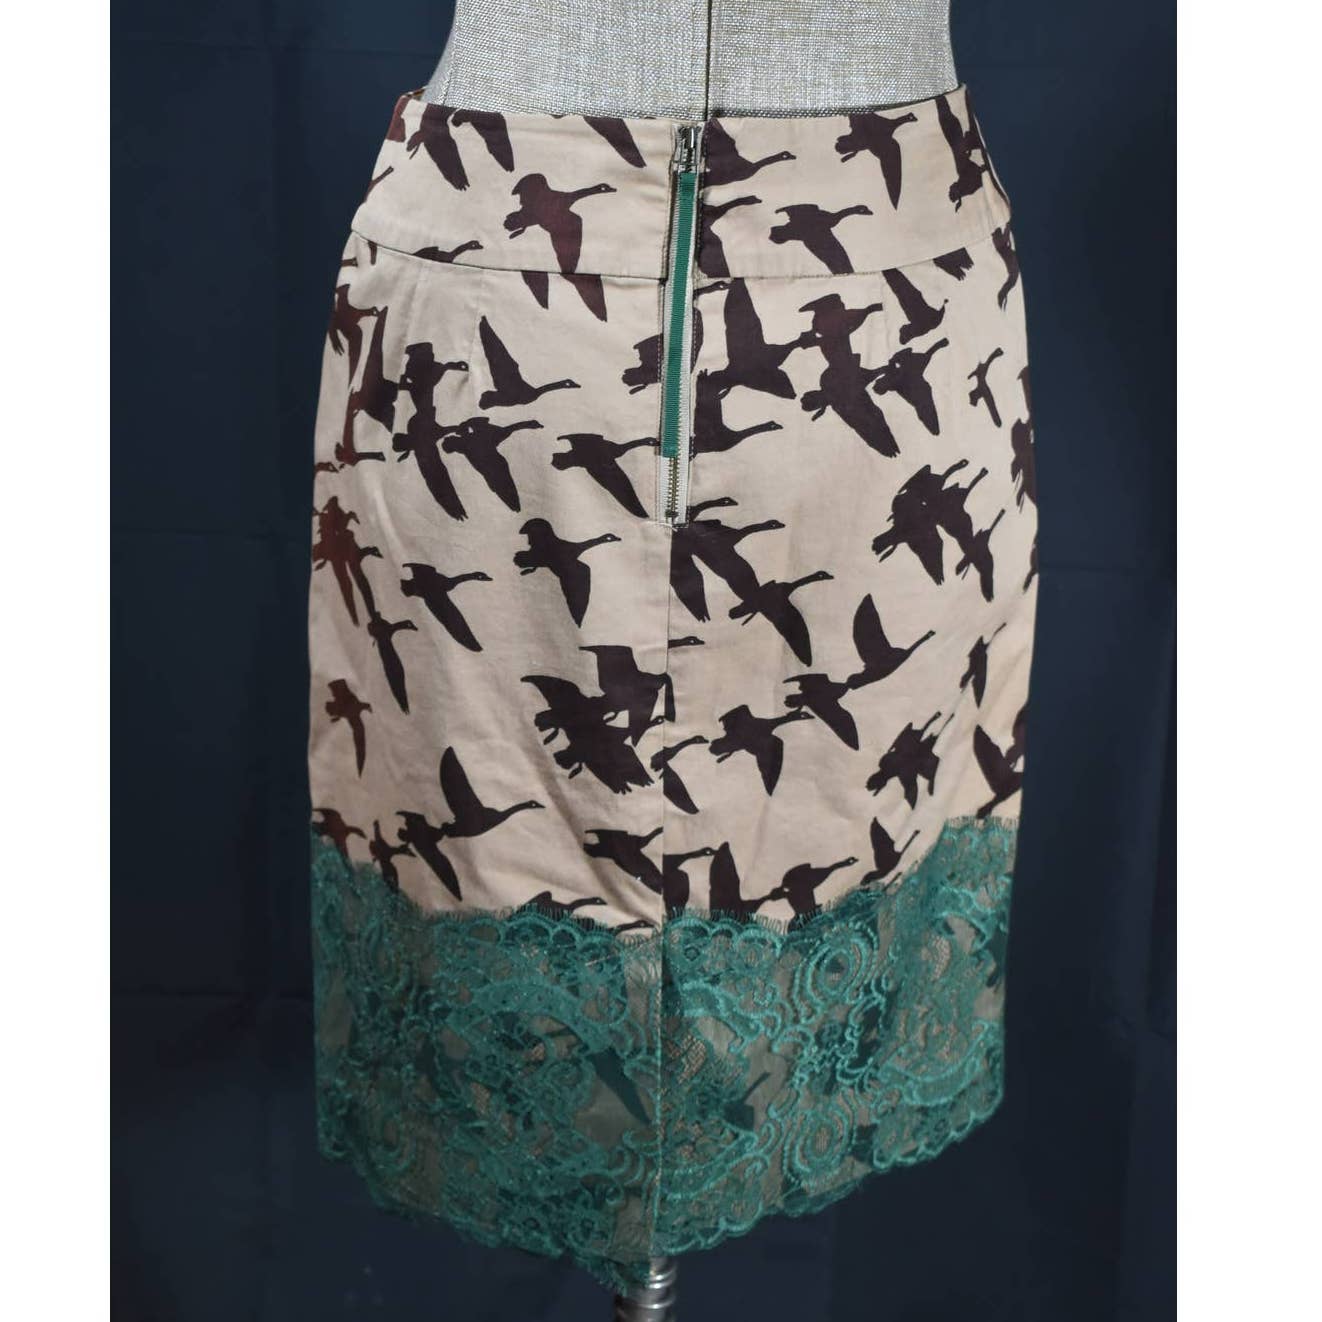 Anthropologie Leifsdottir Tan Brown Green Geese Skirt - 4